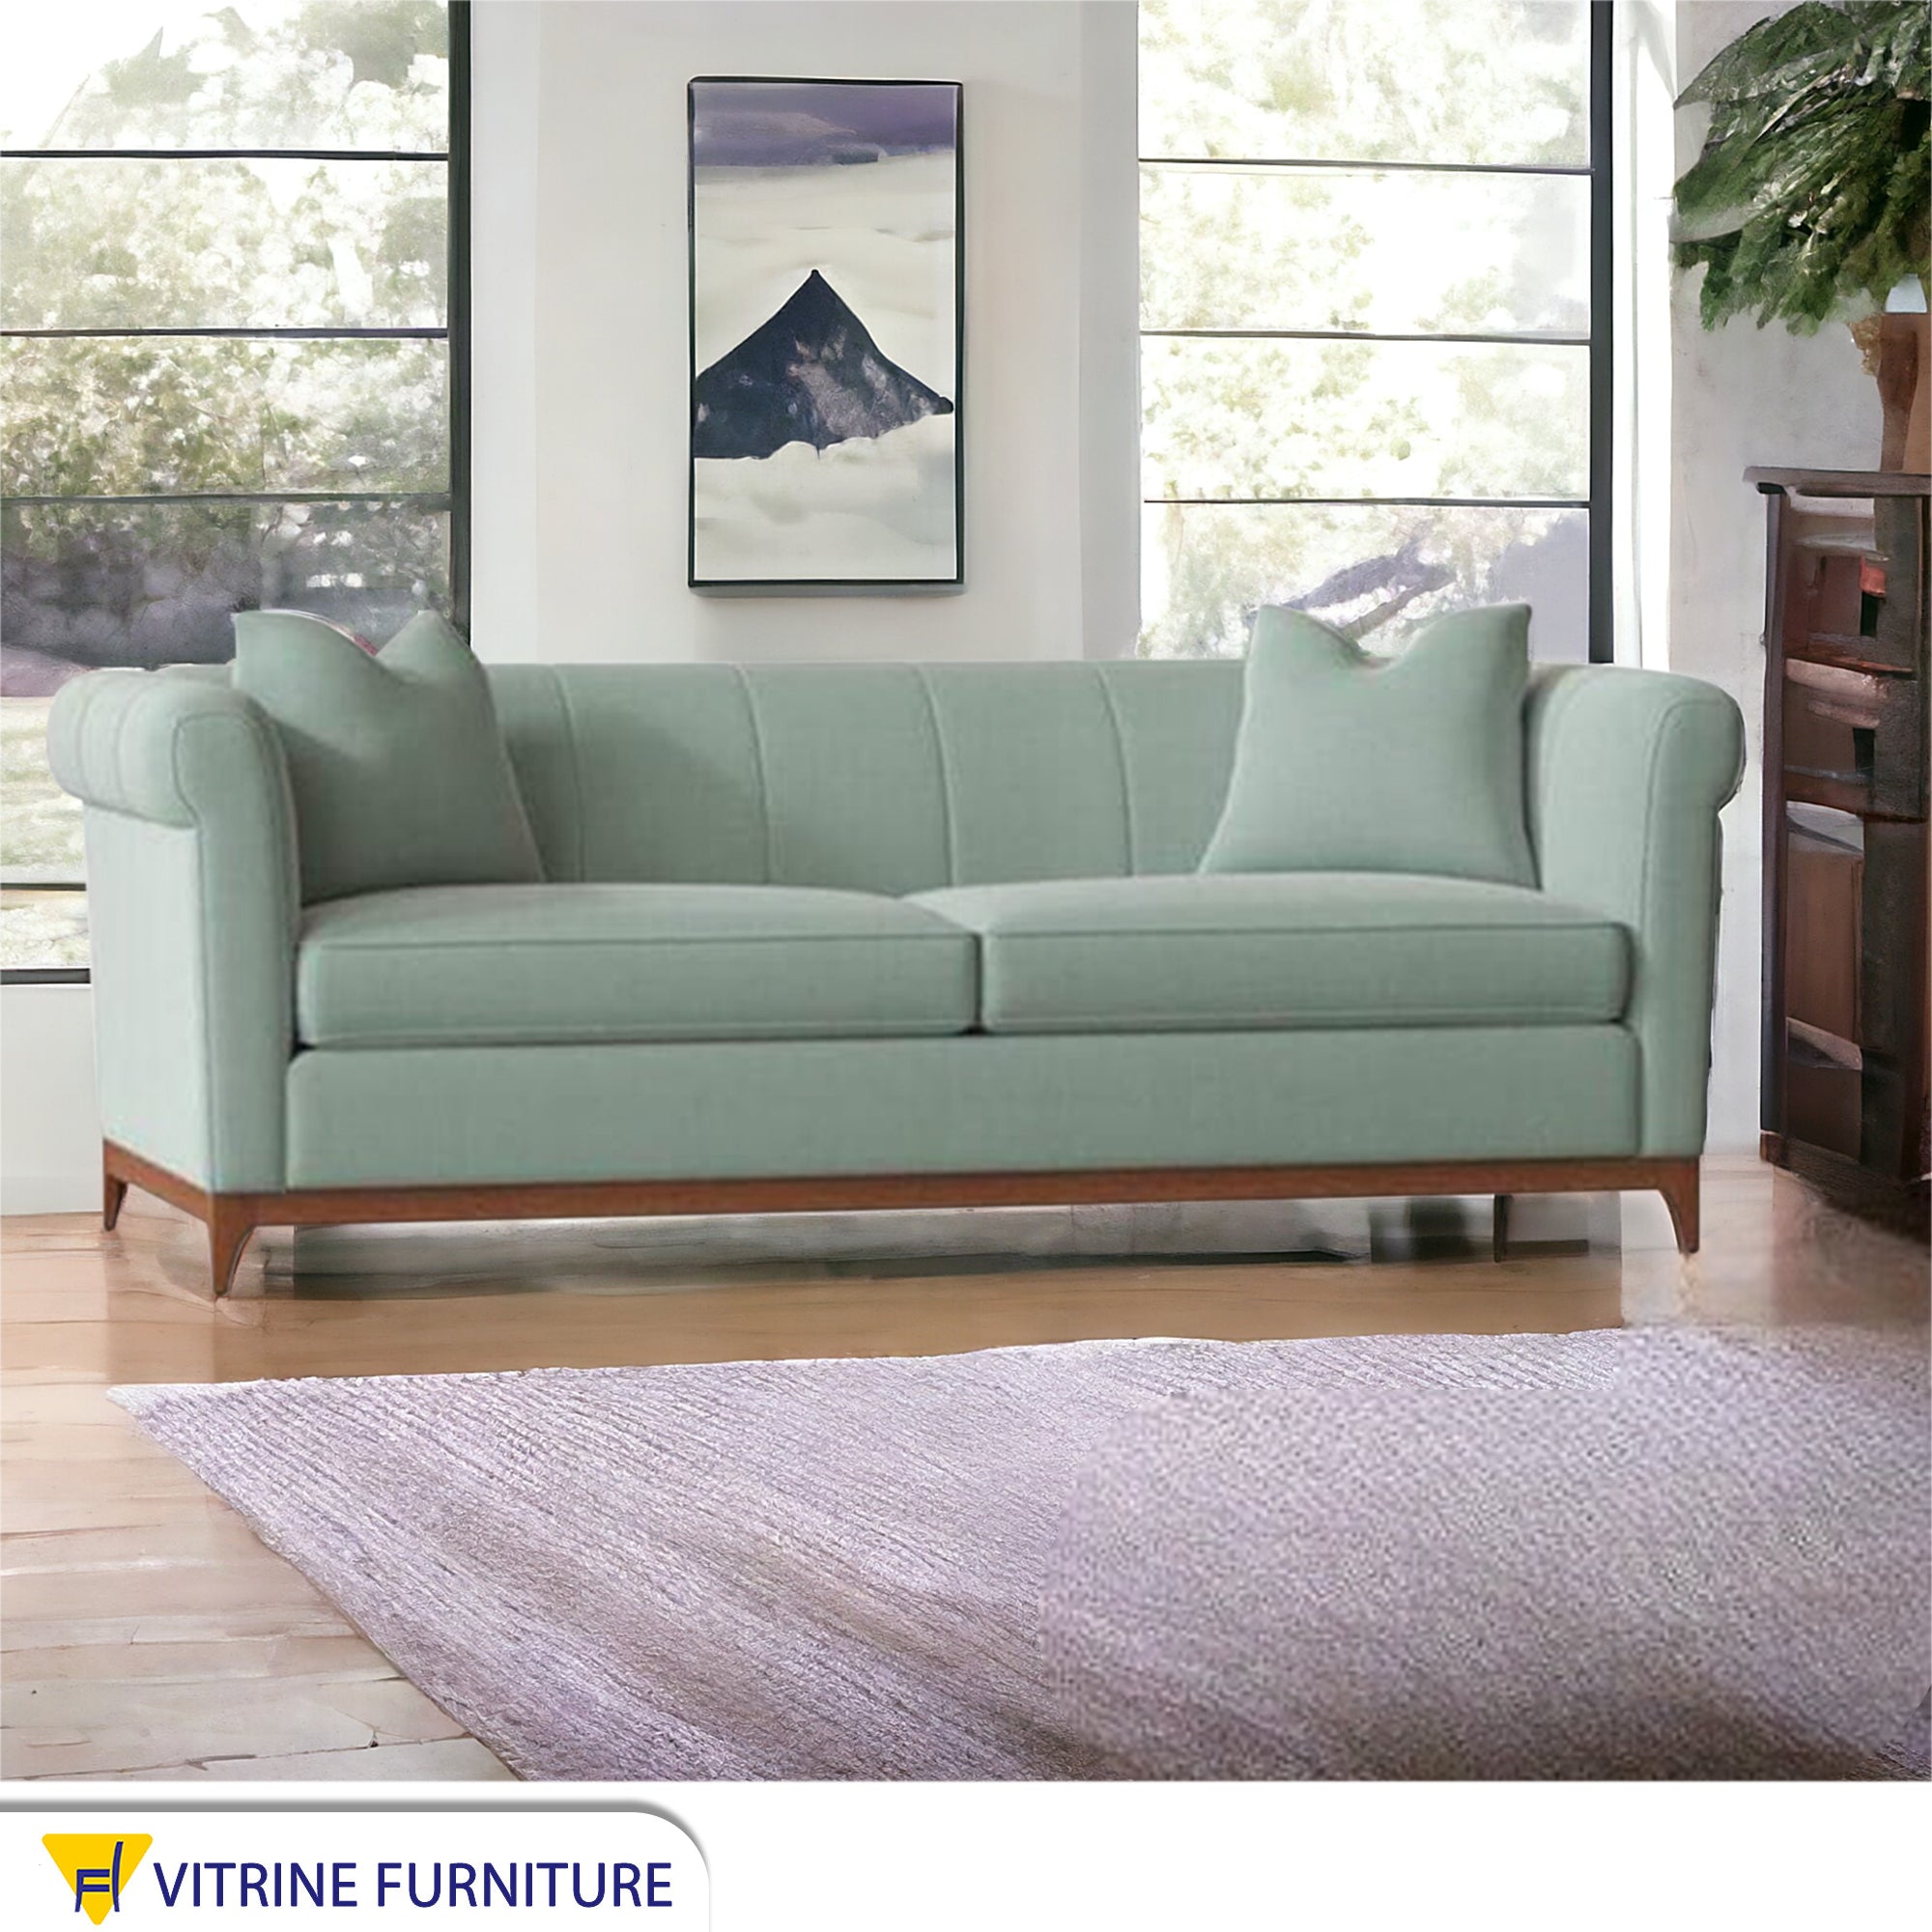 Mint green sofa